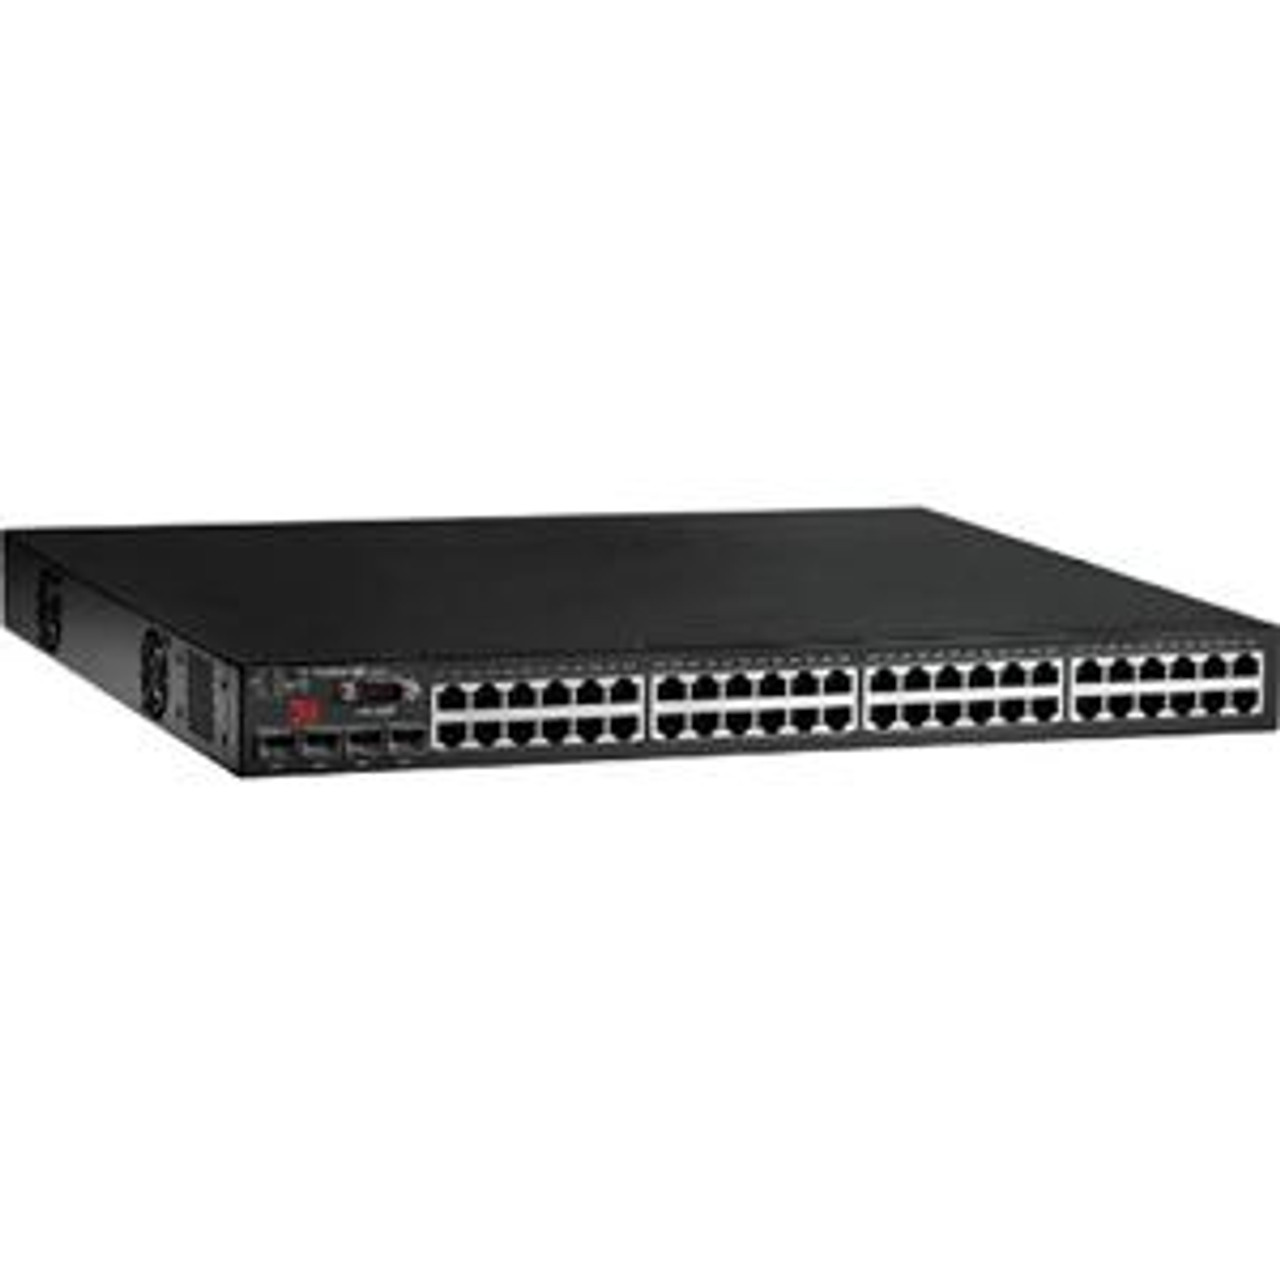 FWS648 Brocade FastIron FWS648 Fast Ethernet Switch 48-Ports Manageable 48 x RJ-45 4 x Expansion Slots 10/100Base-TX (Refurbished)